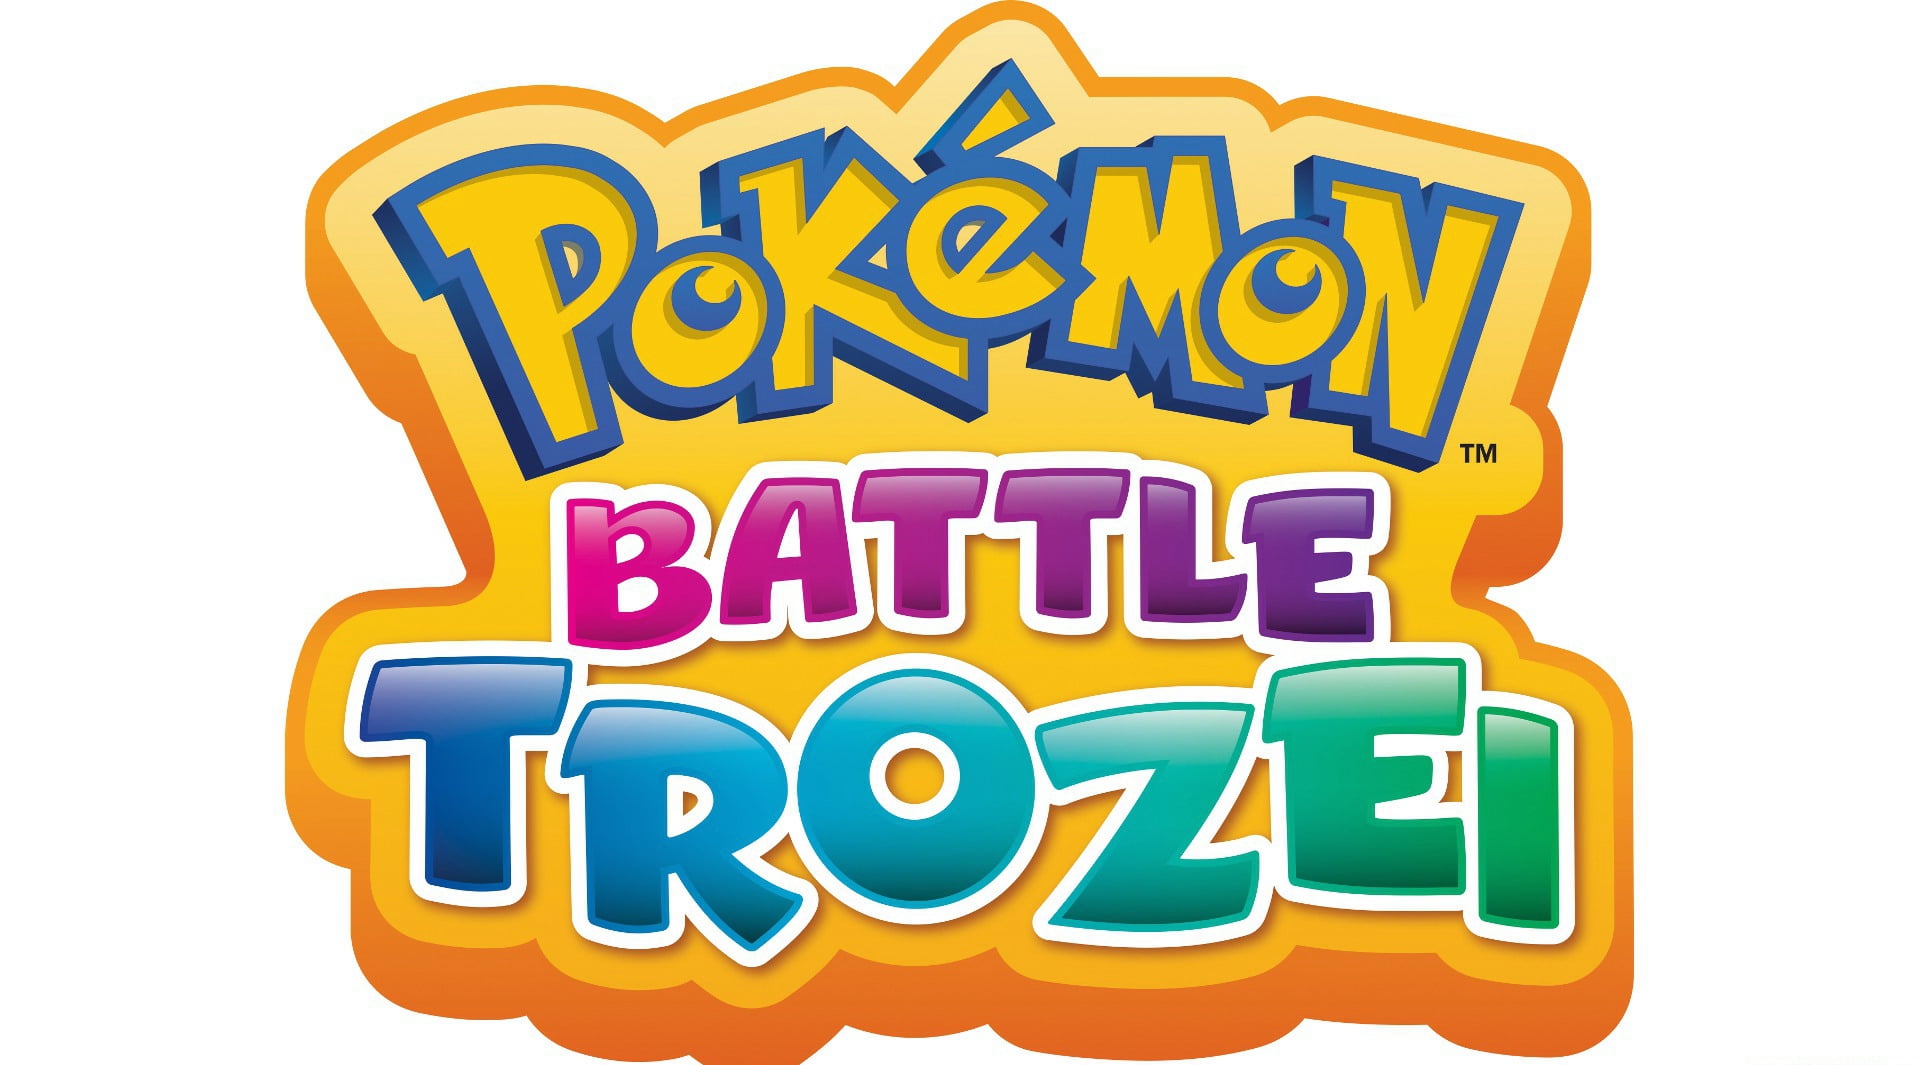 Pokemon Battle Trozei logo, themed puzzle video game, march, 2014